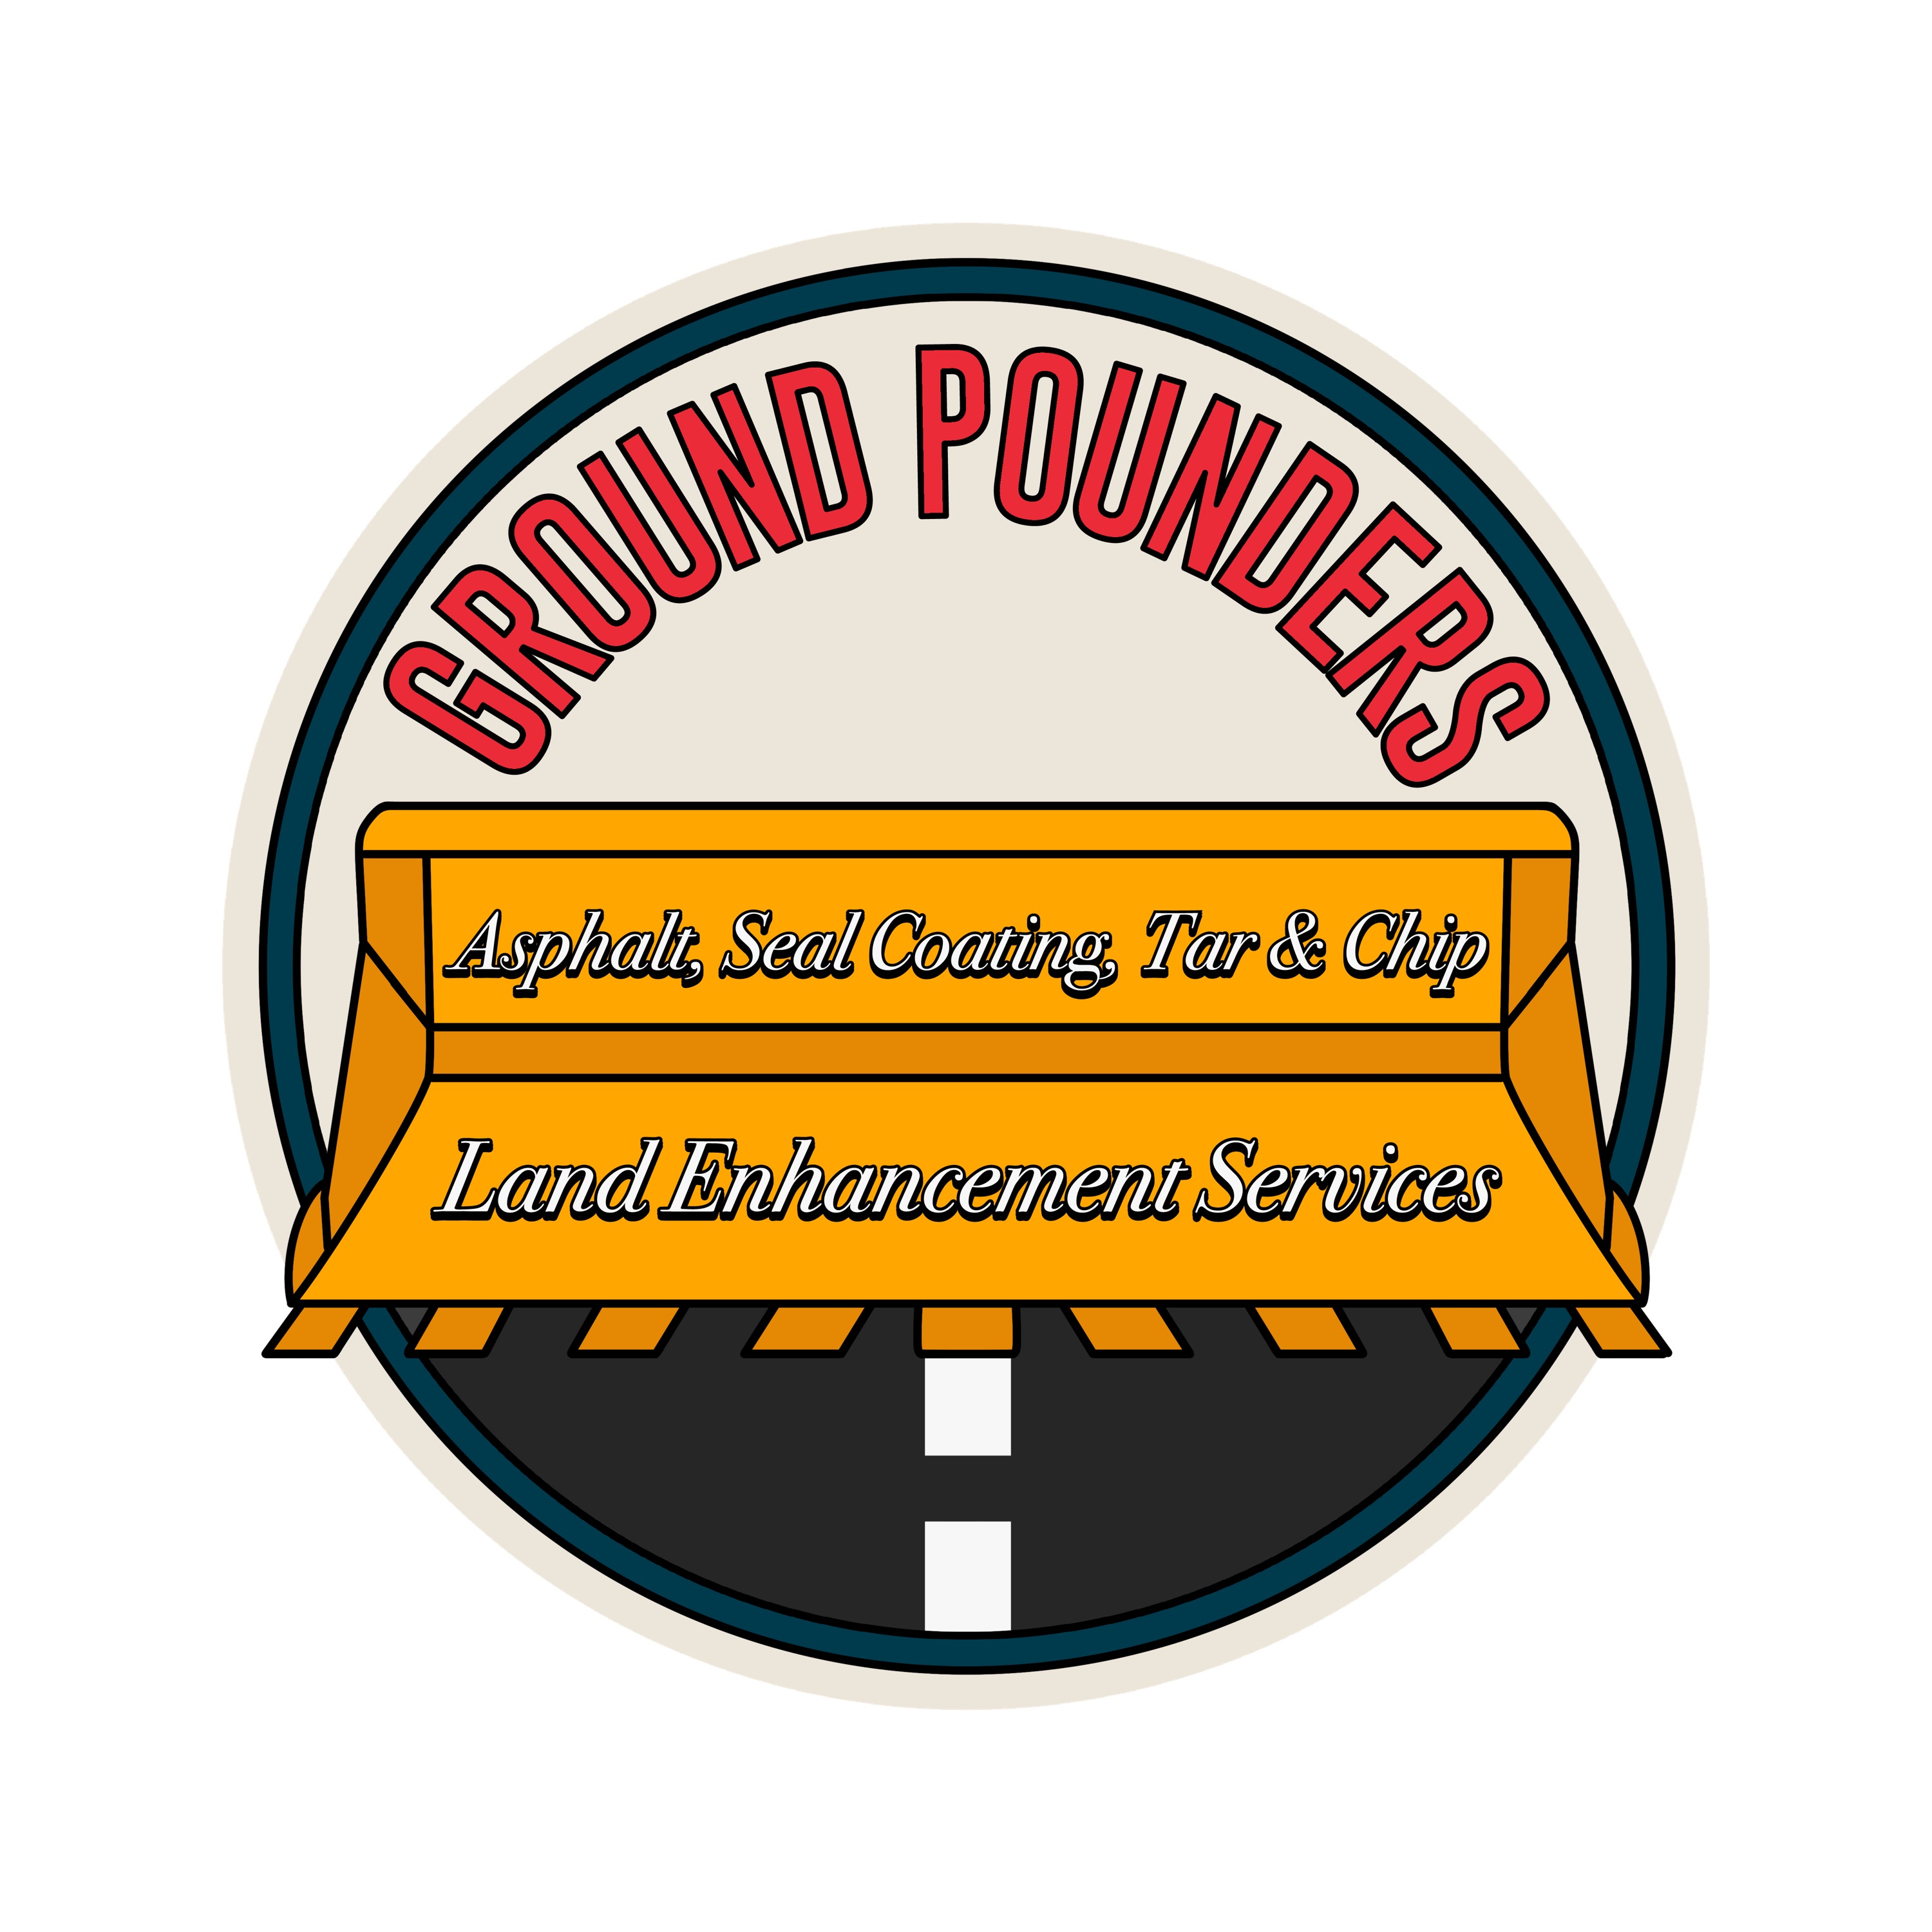 Ground Pounders Logo